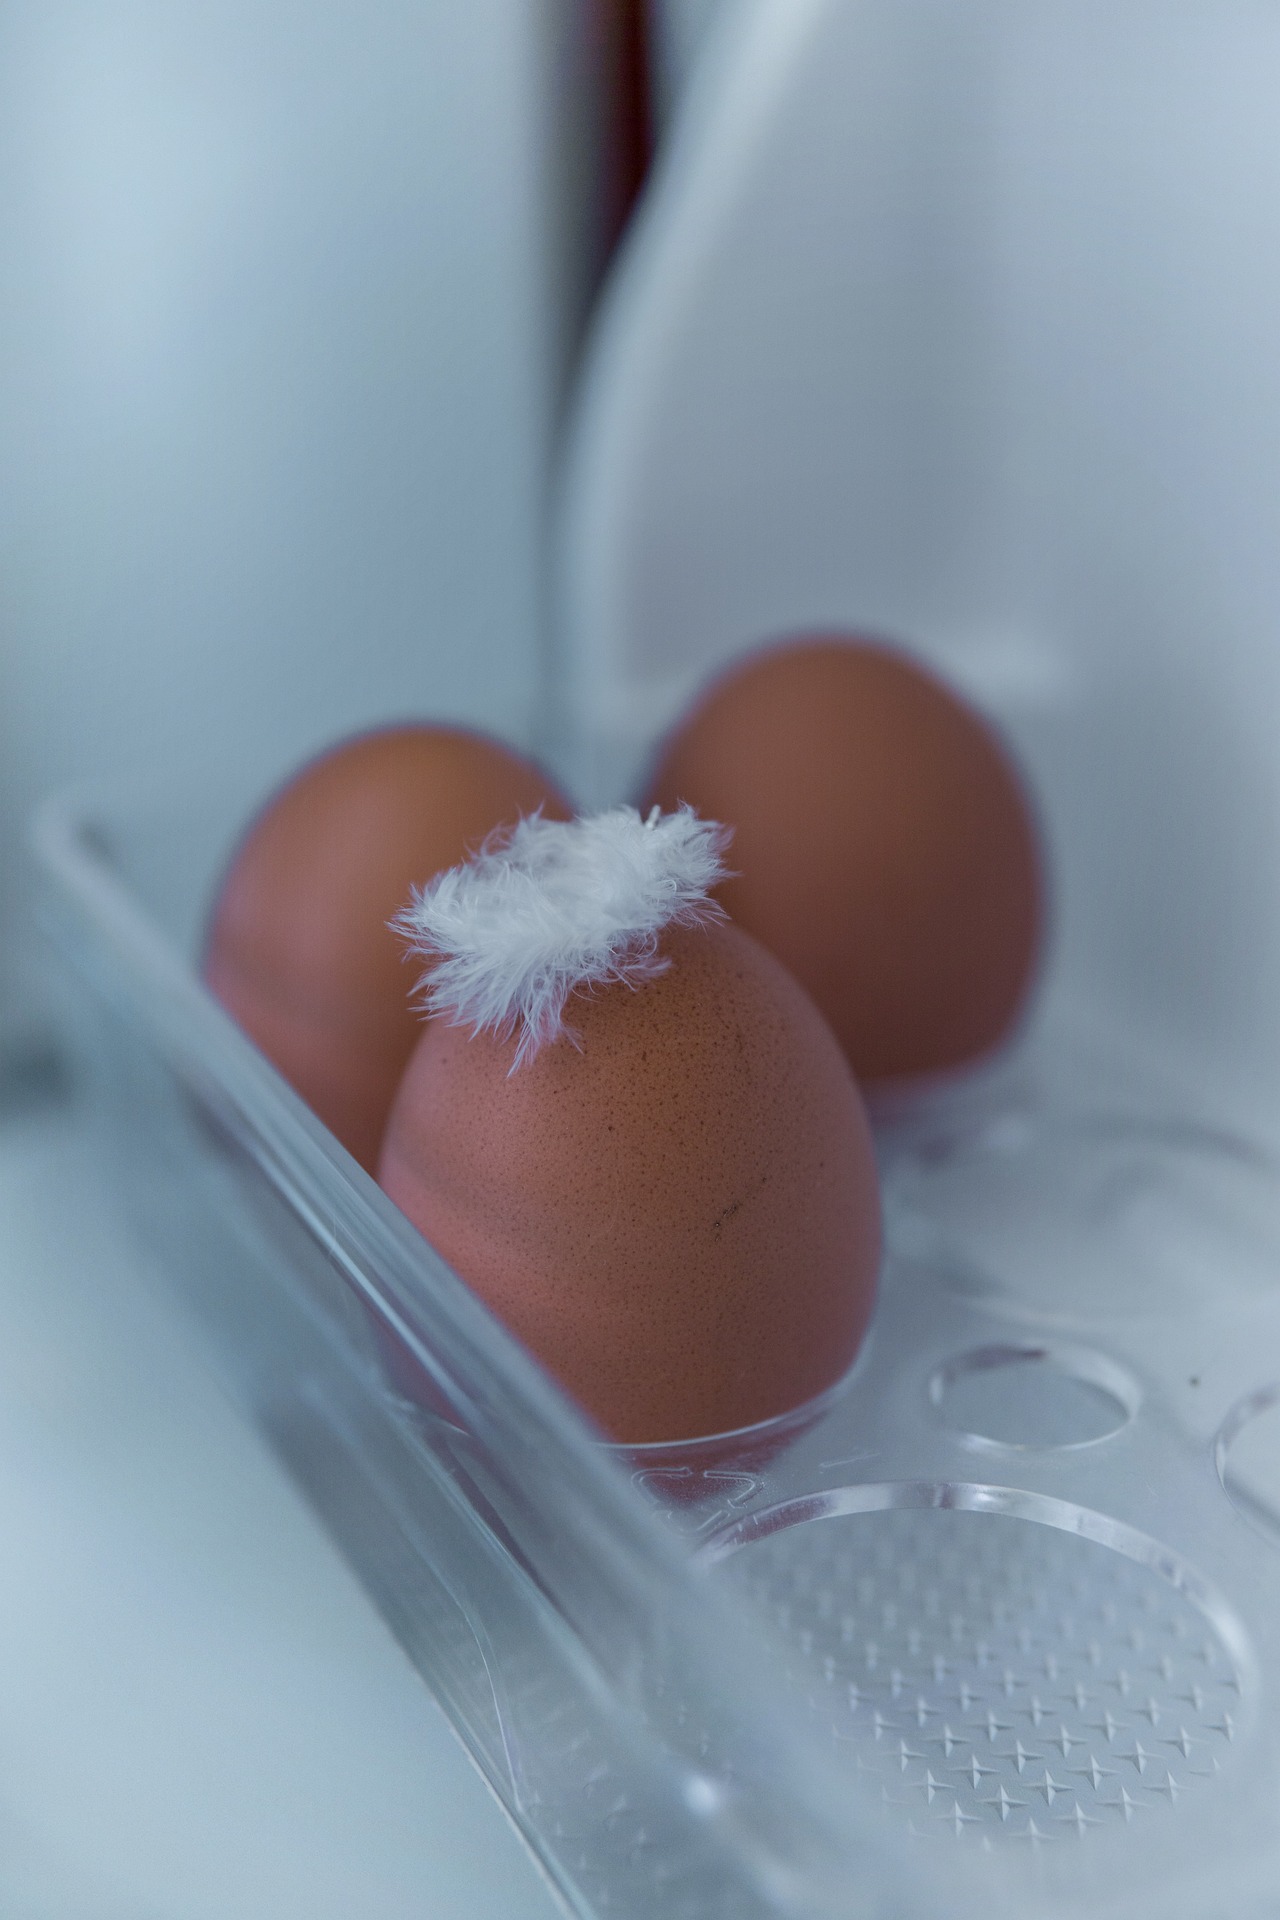 Uova conservate al freddo